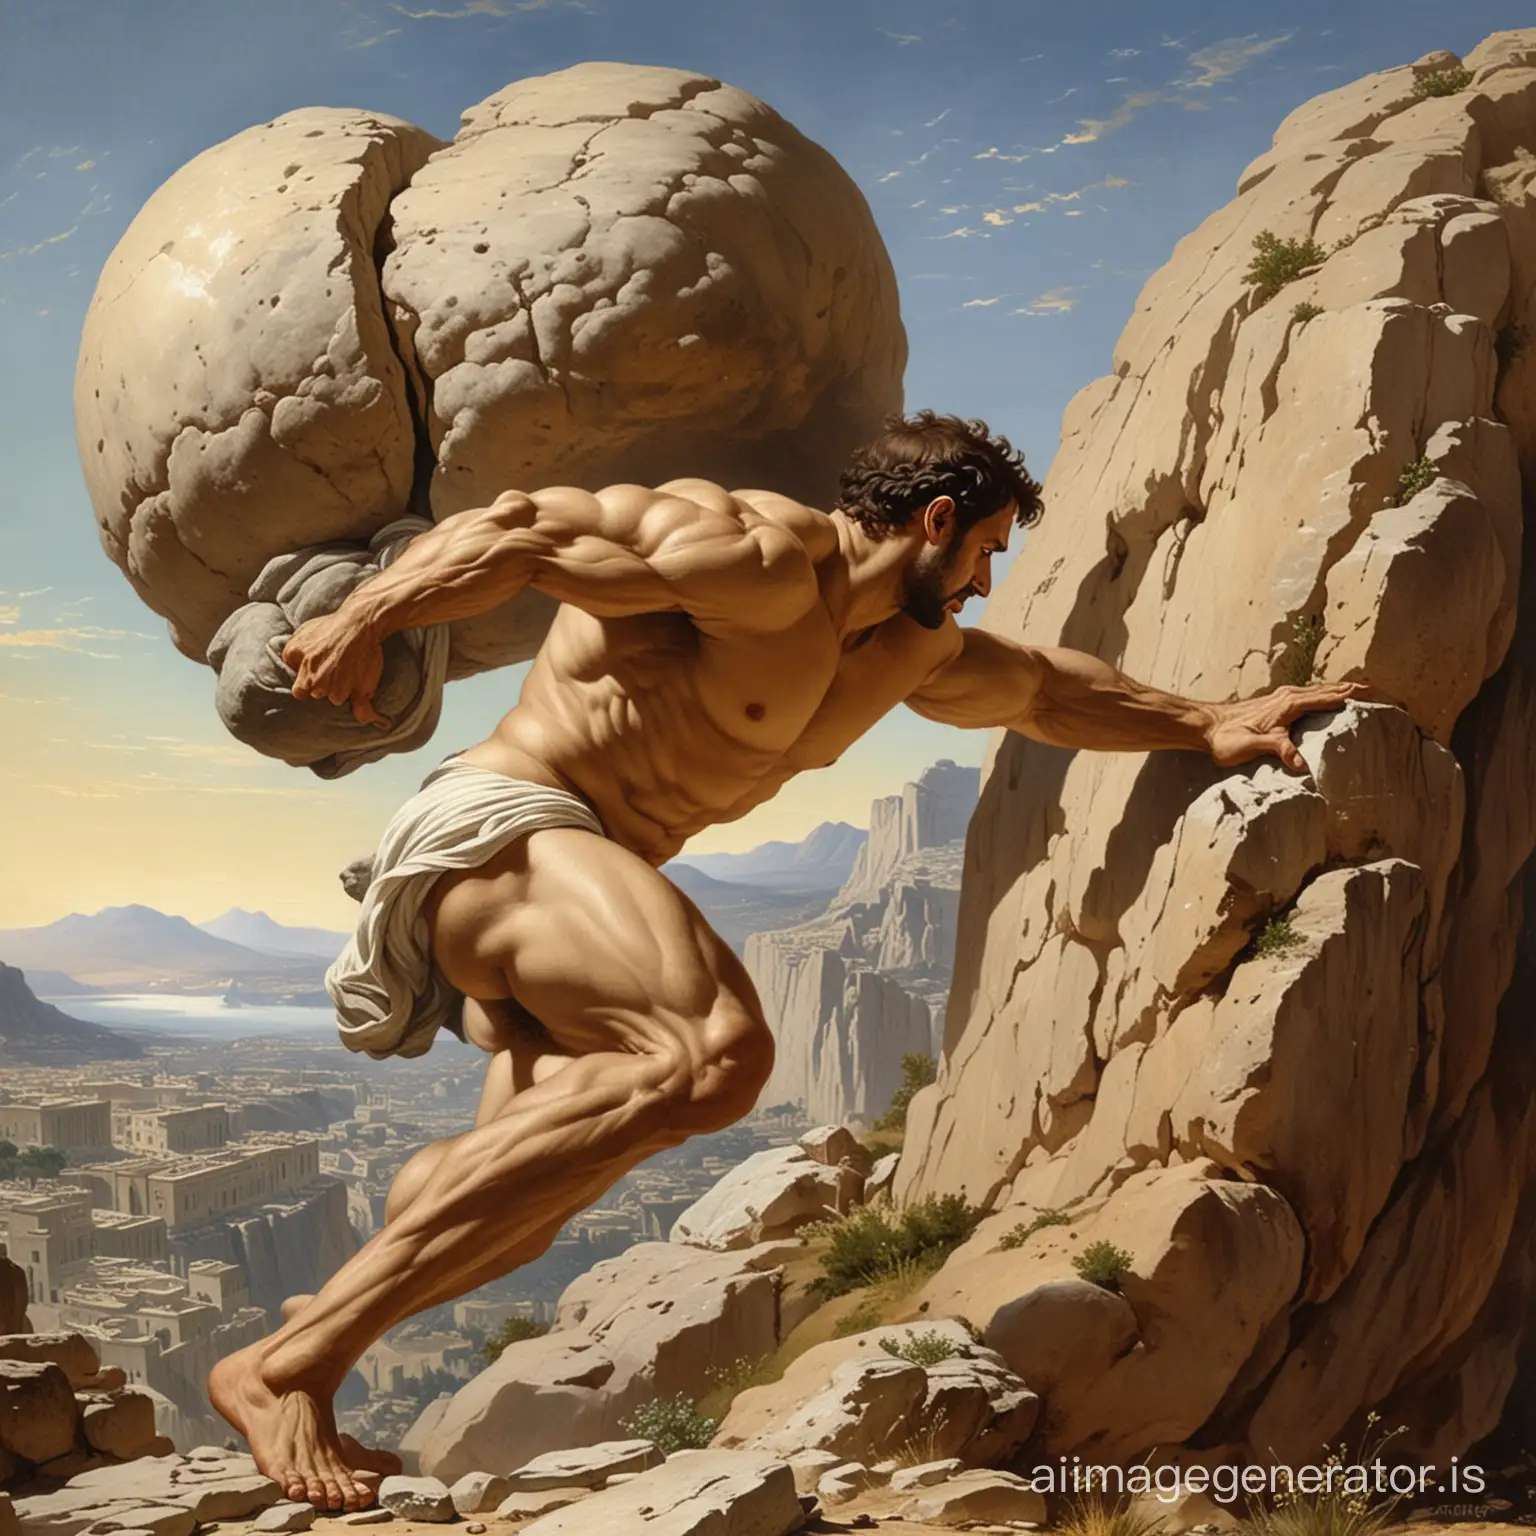 Sculpted-Sisyphus-Greek-Mythology-Depiction-of-Endless-Toil